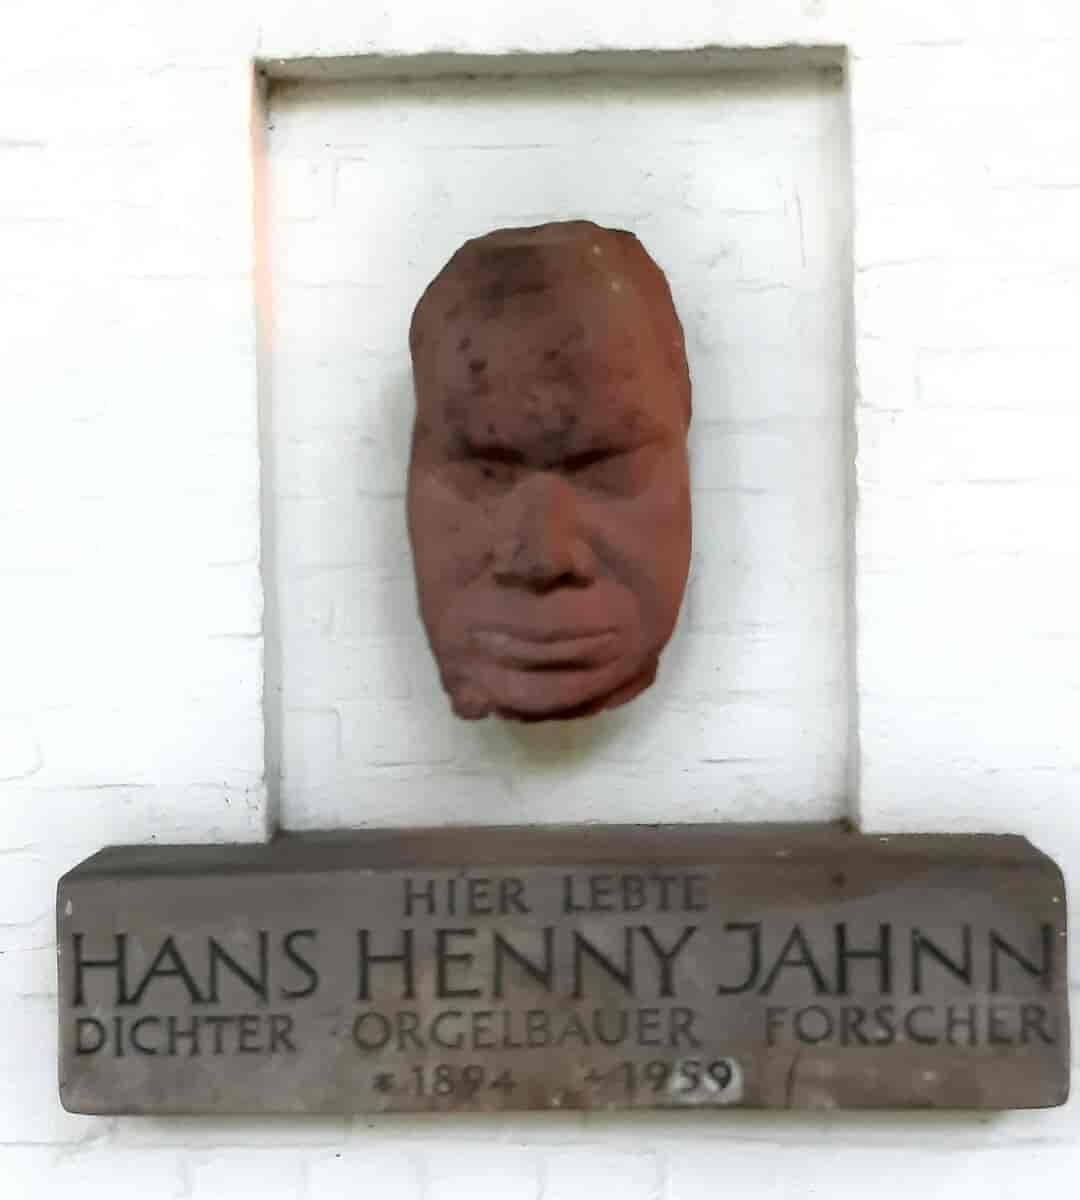 Relieff av Hans Henny Jahnn på huset i Elbchaussee 499a, Hamburg-Blankenese, Jahnns siste bopæl